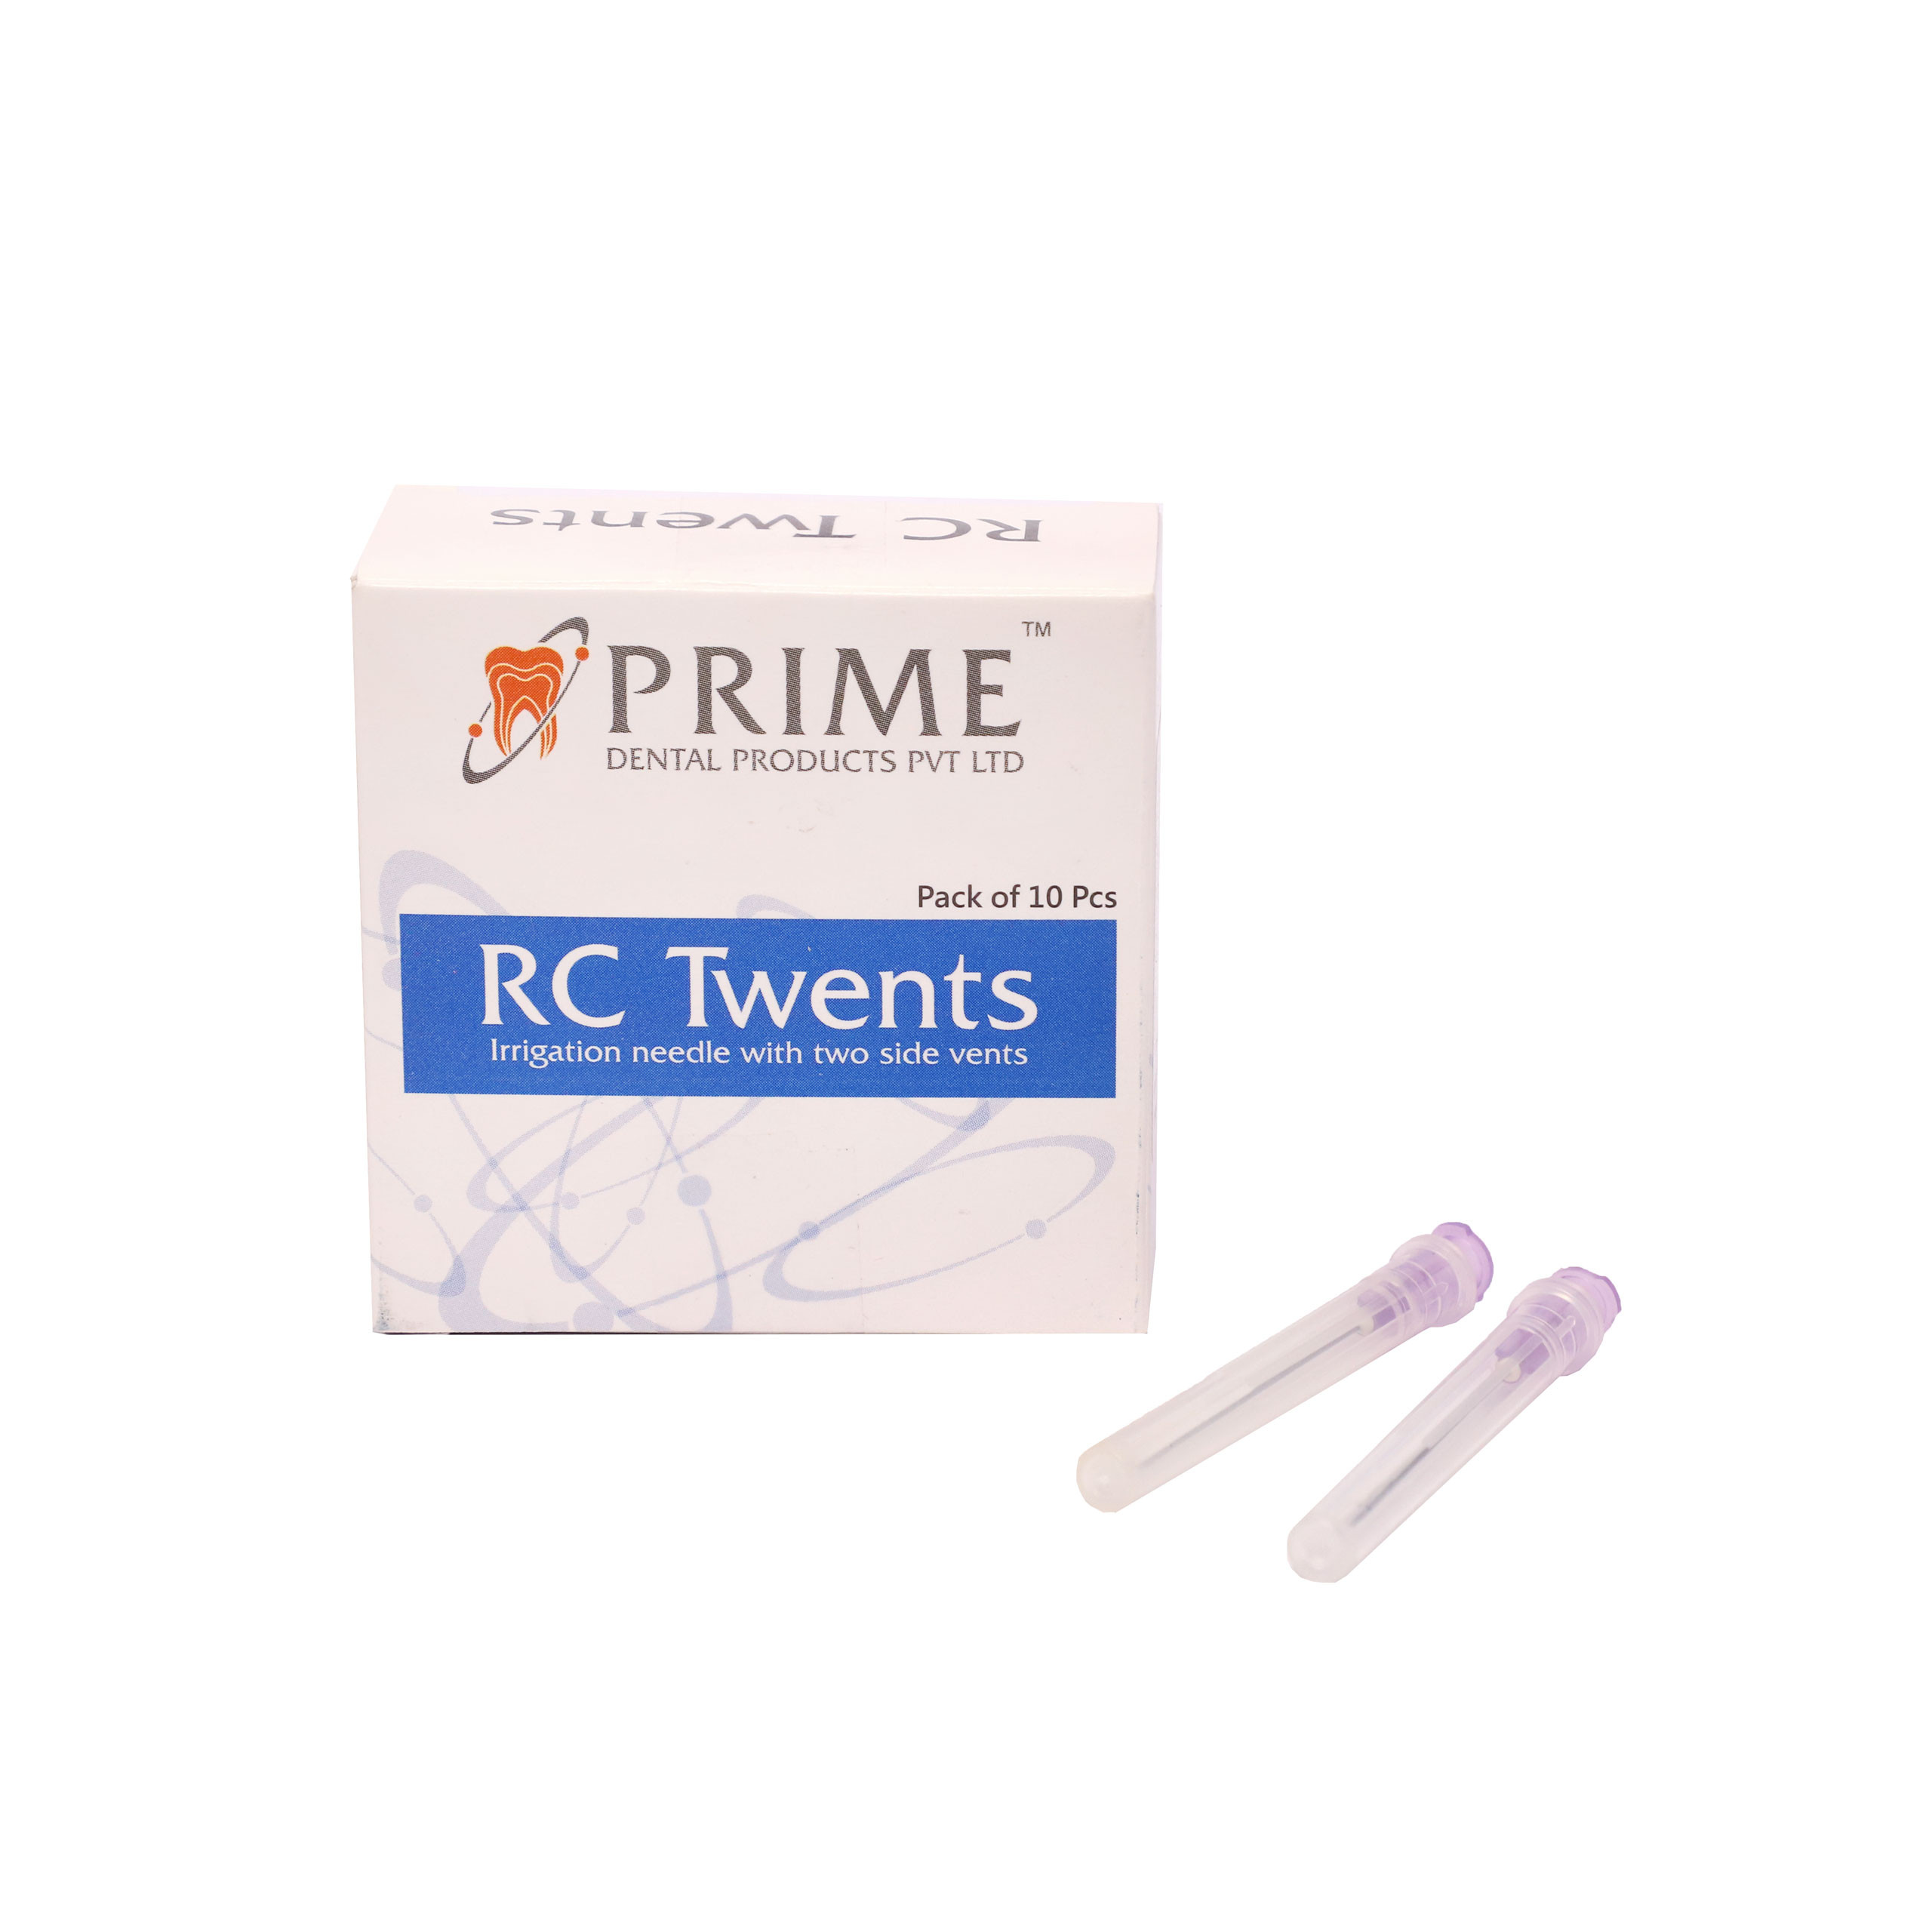 Prime RC Twents